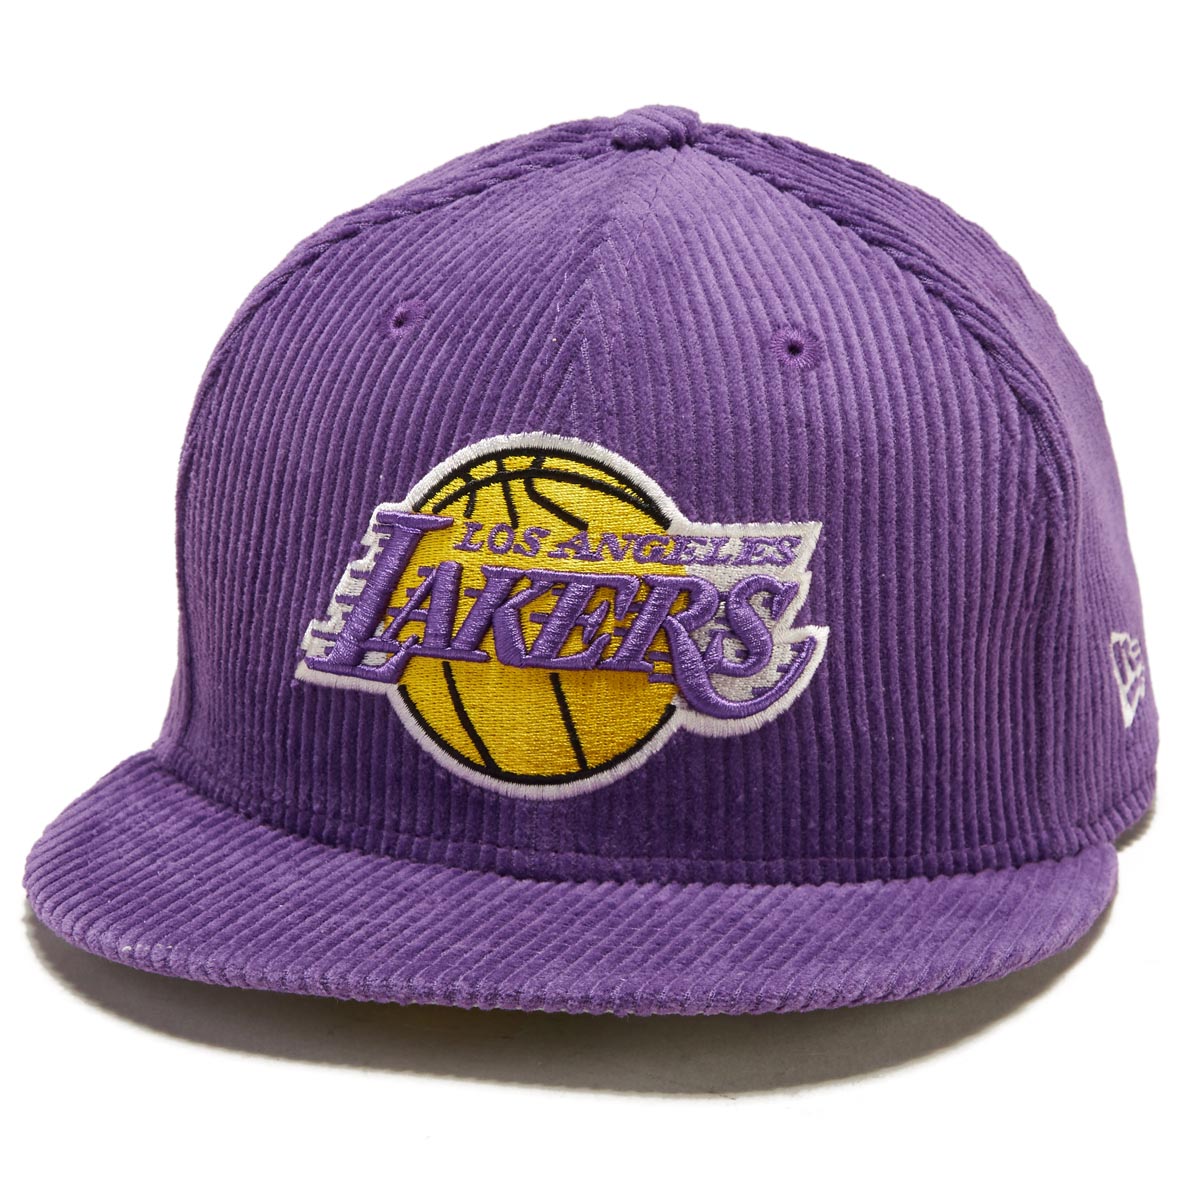 New Era 5950 Letterman Pin Hat - Los Angeles Lakers image 1